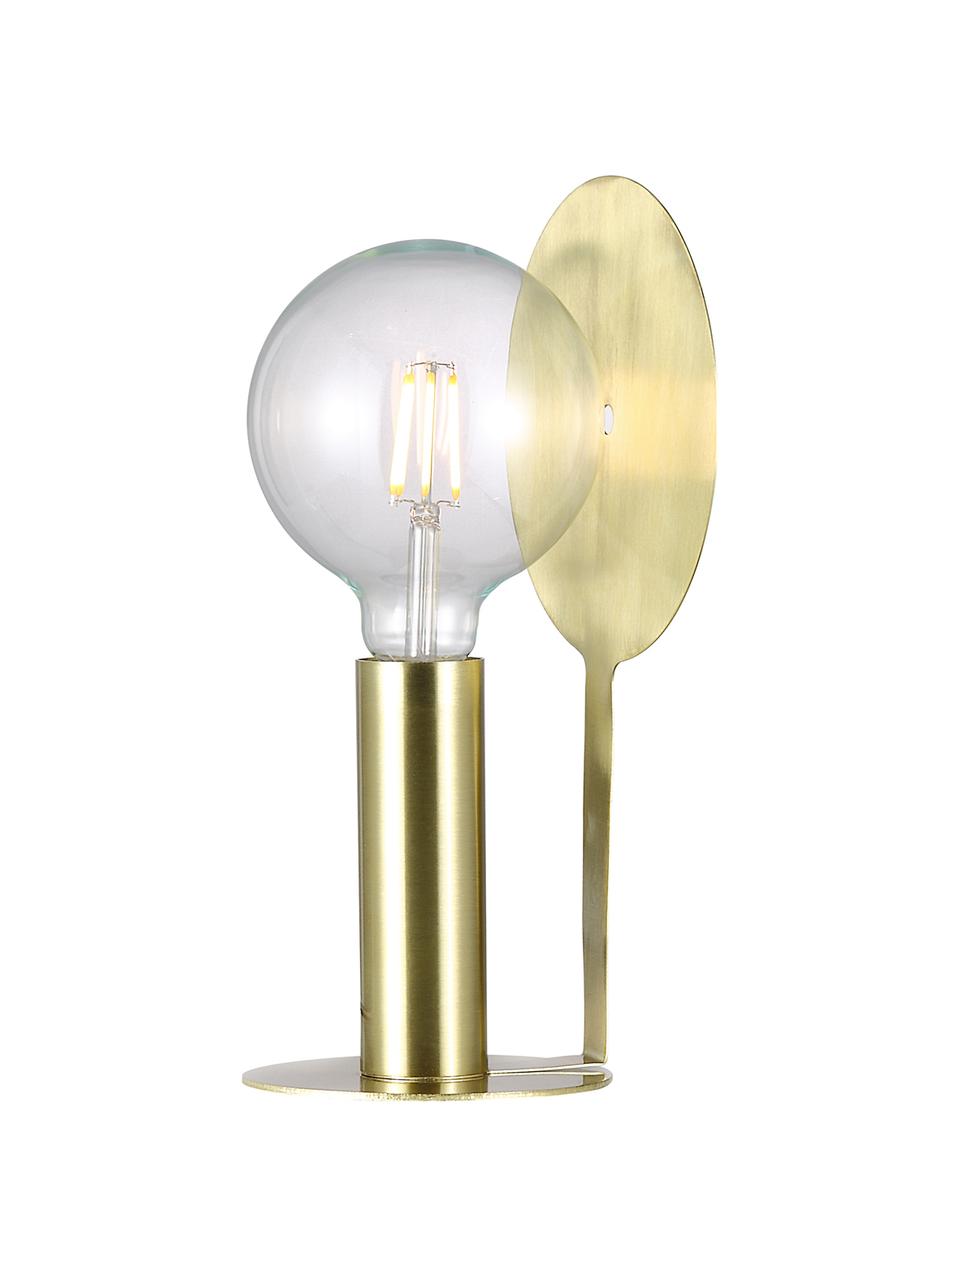 Kleine tafellamp Dean met messing-reflector, Lampvoet: messing, Lampenkap: messing, Messingkleurig, 17 x 32 cm